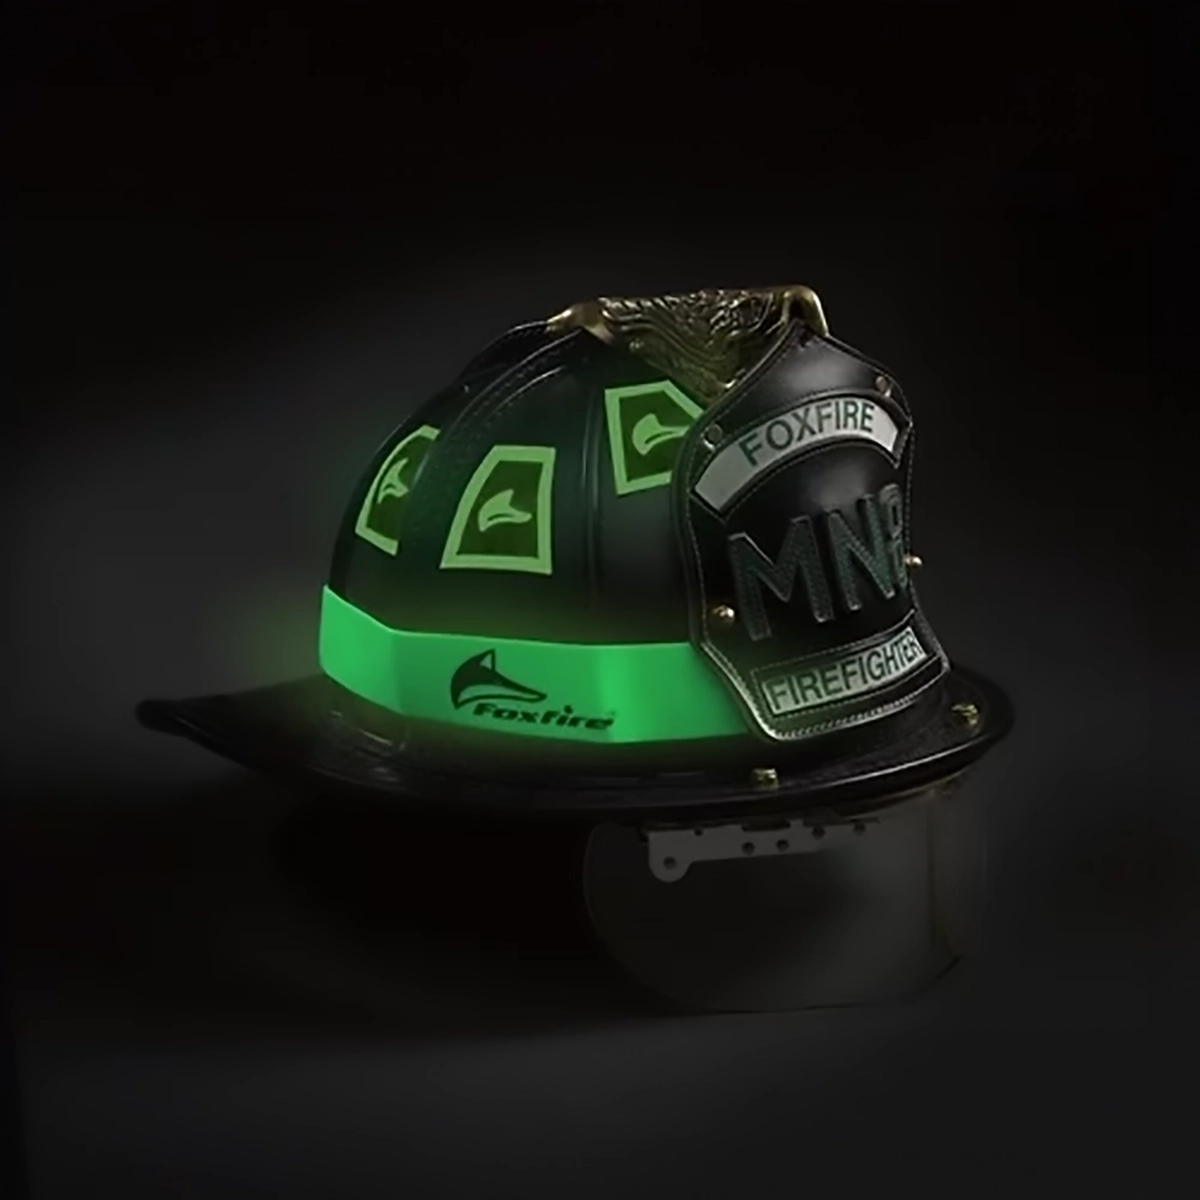 FoxFire Illuminating Helmet Band 